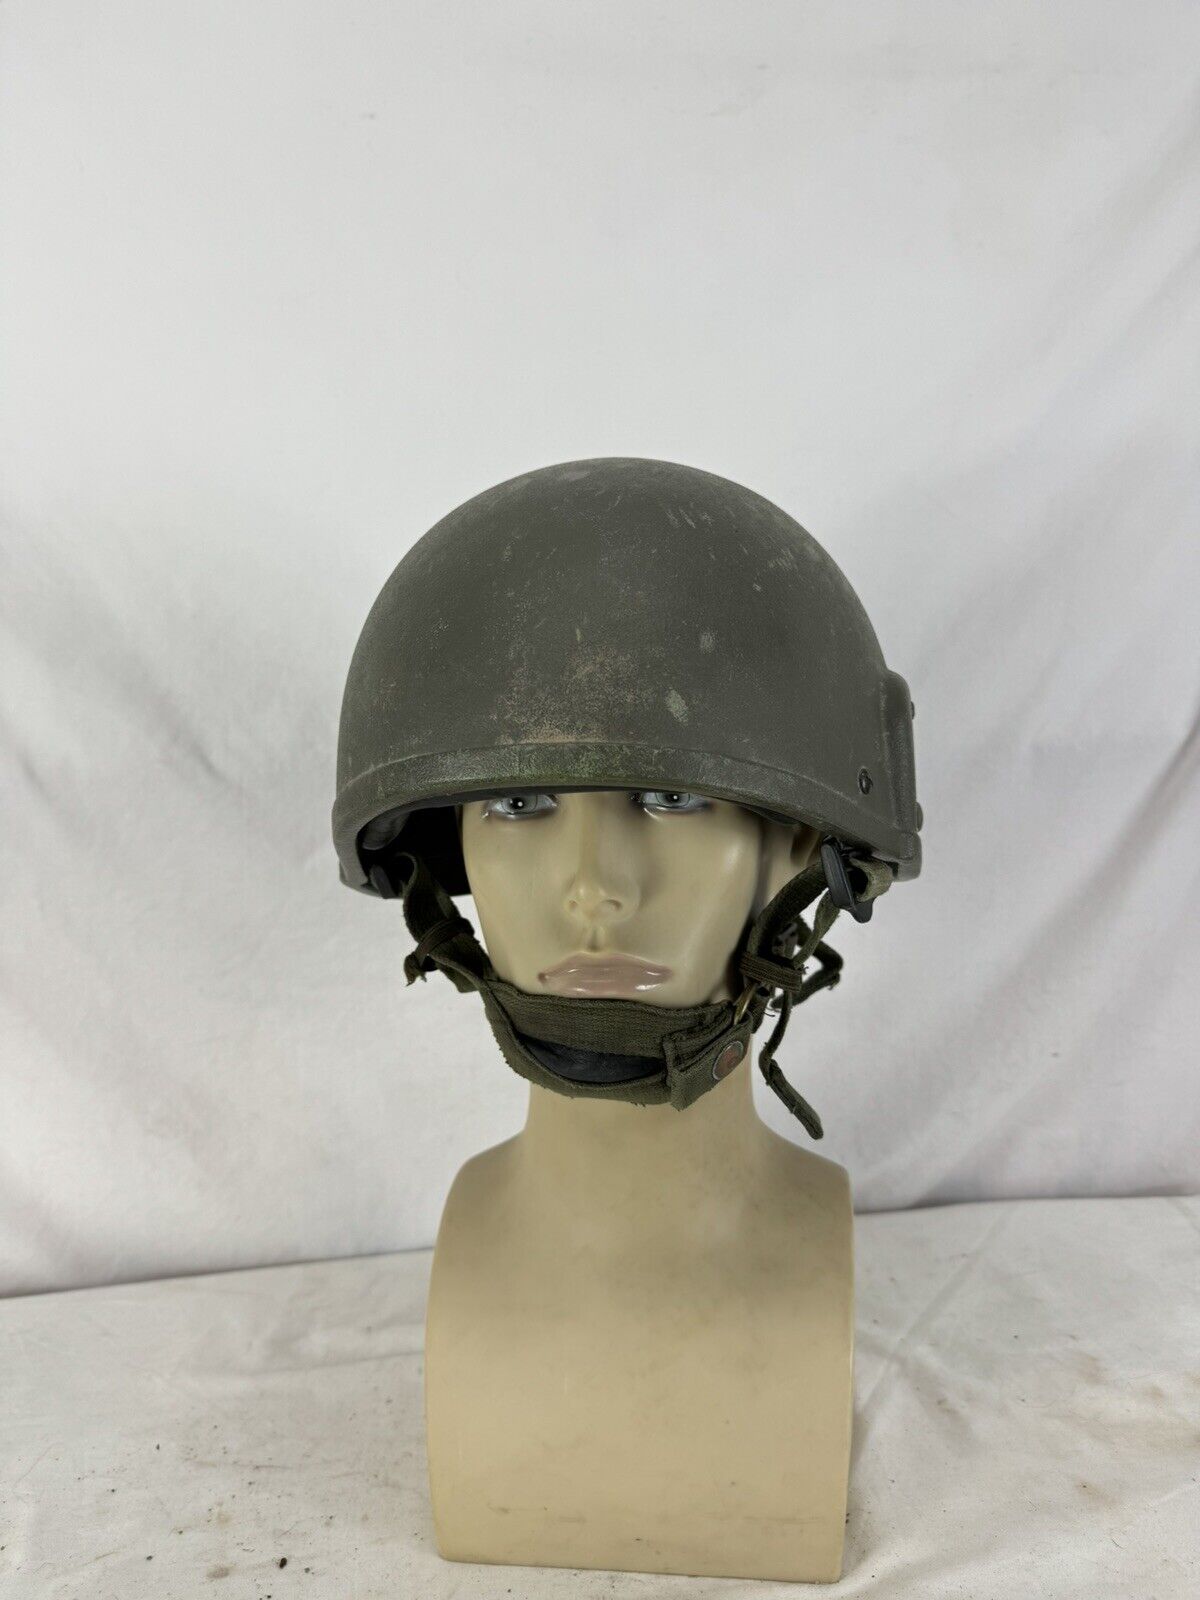 British Military Surplus MK6 Ballistic Helmet 2009 Manufacture Size Large